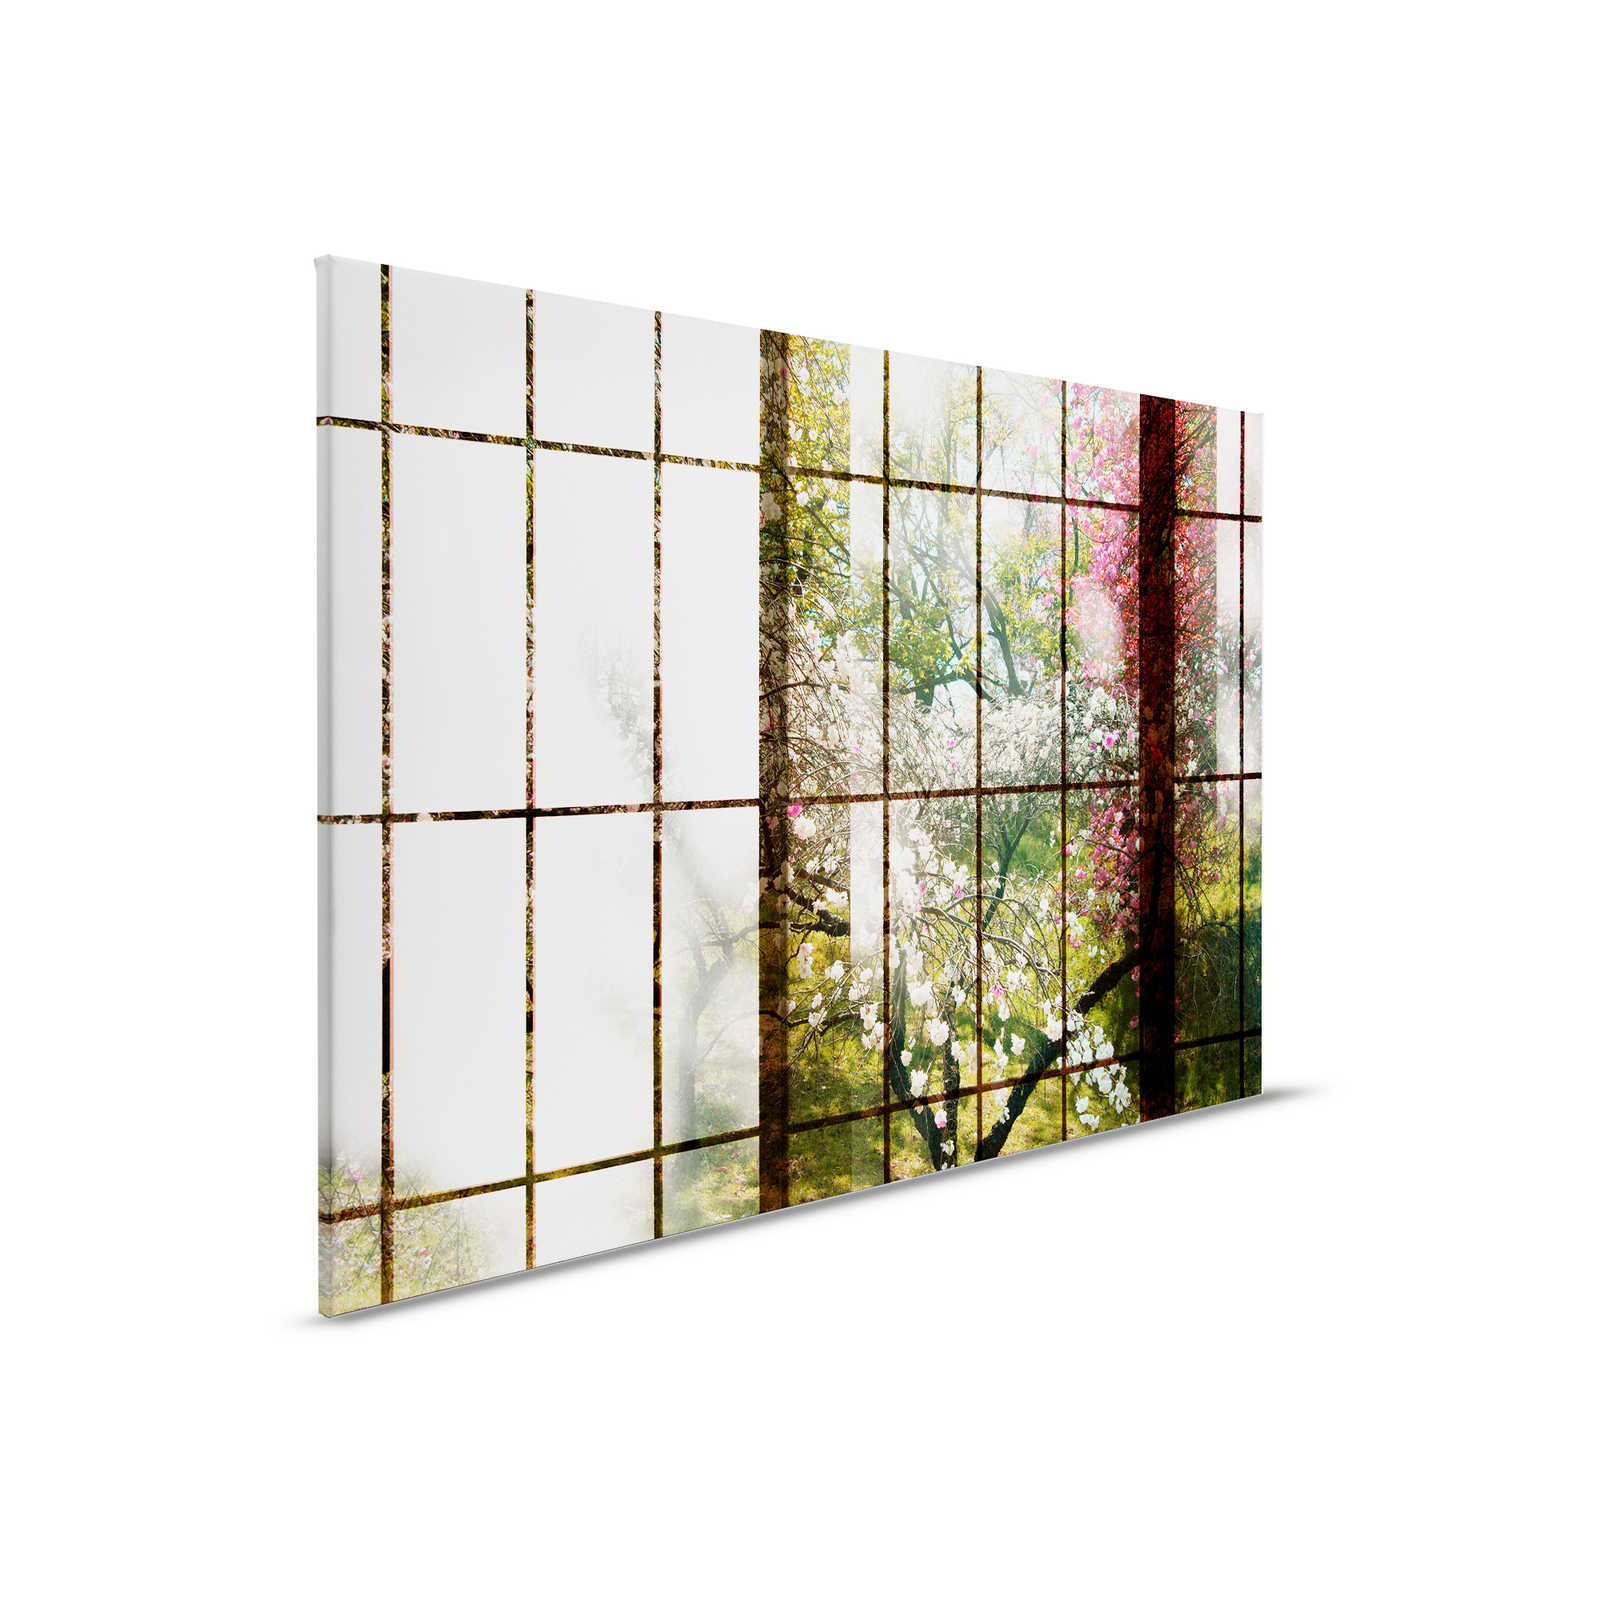         Orchard 1 - Leinwandbild, Fenster mit Garten Ausblick – 0,90 m x 0,60 m
    